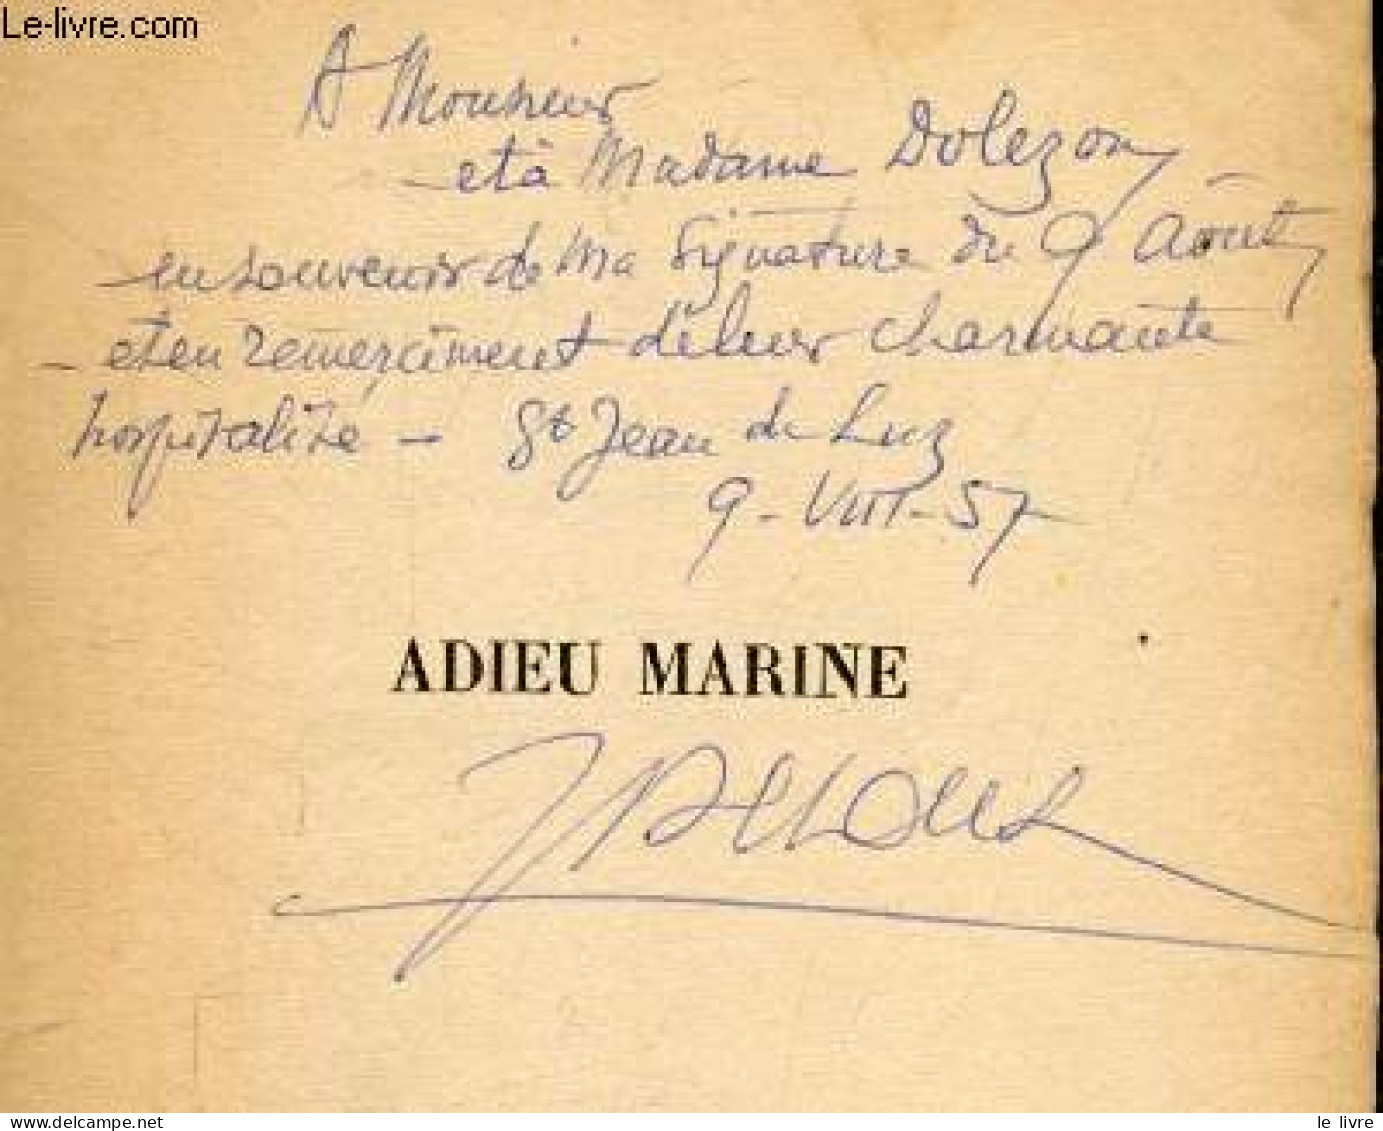 Adieu Marine + Envoi De L'auteur - DECOUX JEAN - 1957 - Libri Con Dedica